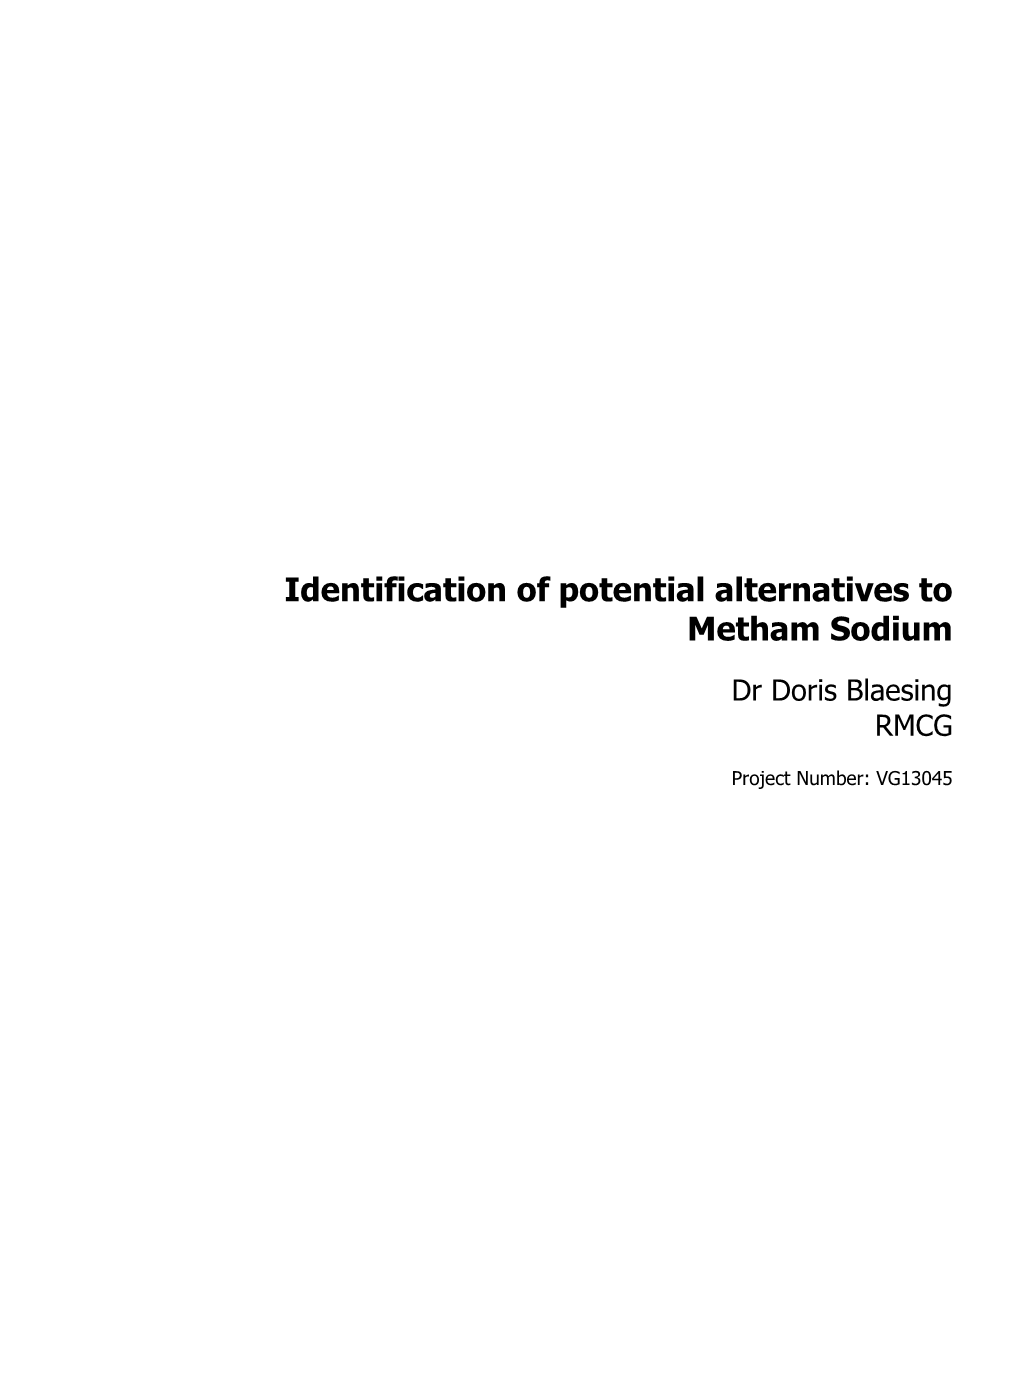 Identification of Potential Alternatives to Metham Sodium